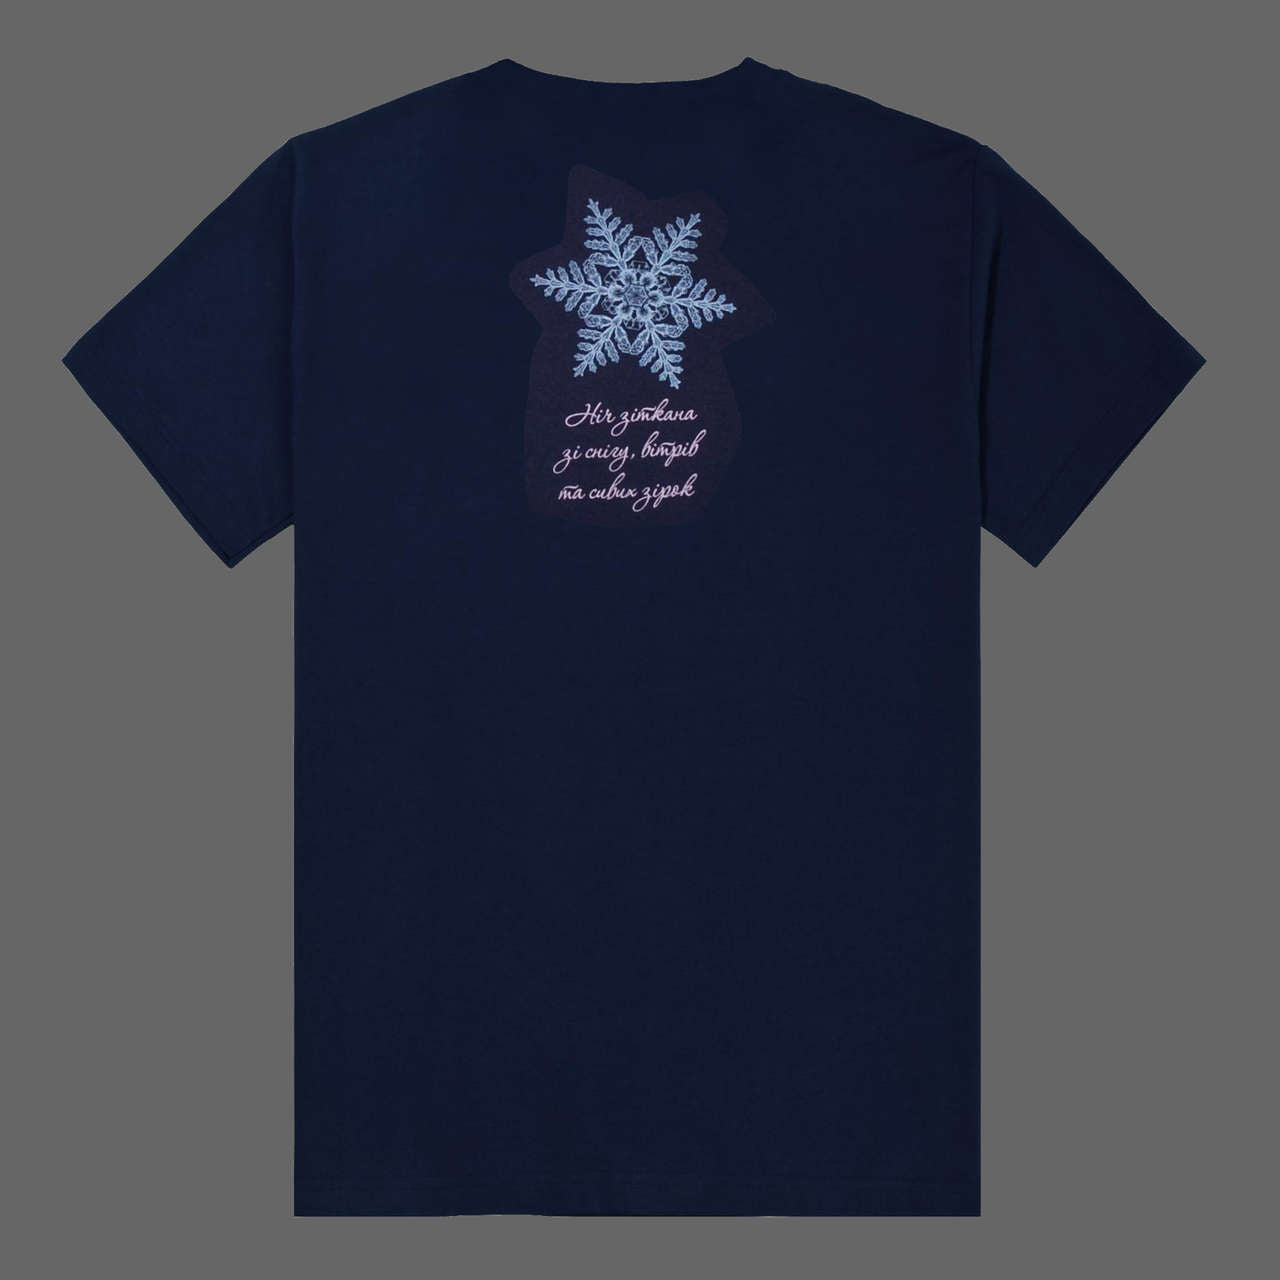 Drudkh - Night (Navy) (T-Shirt)